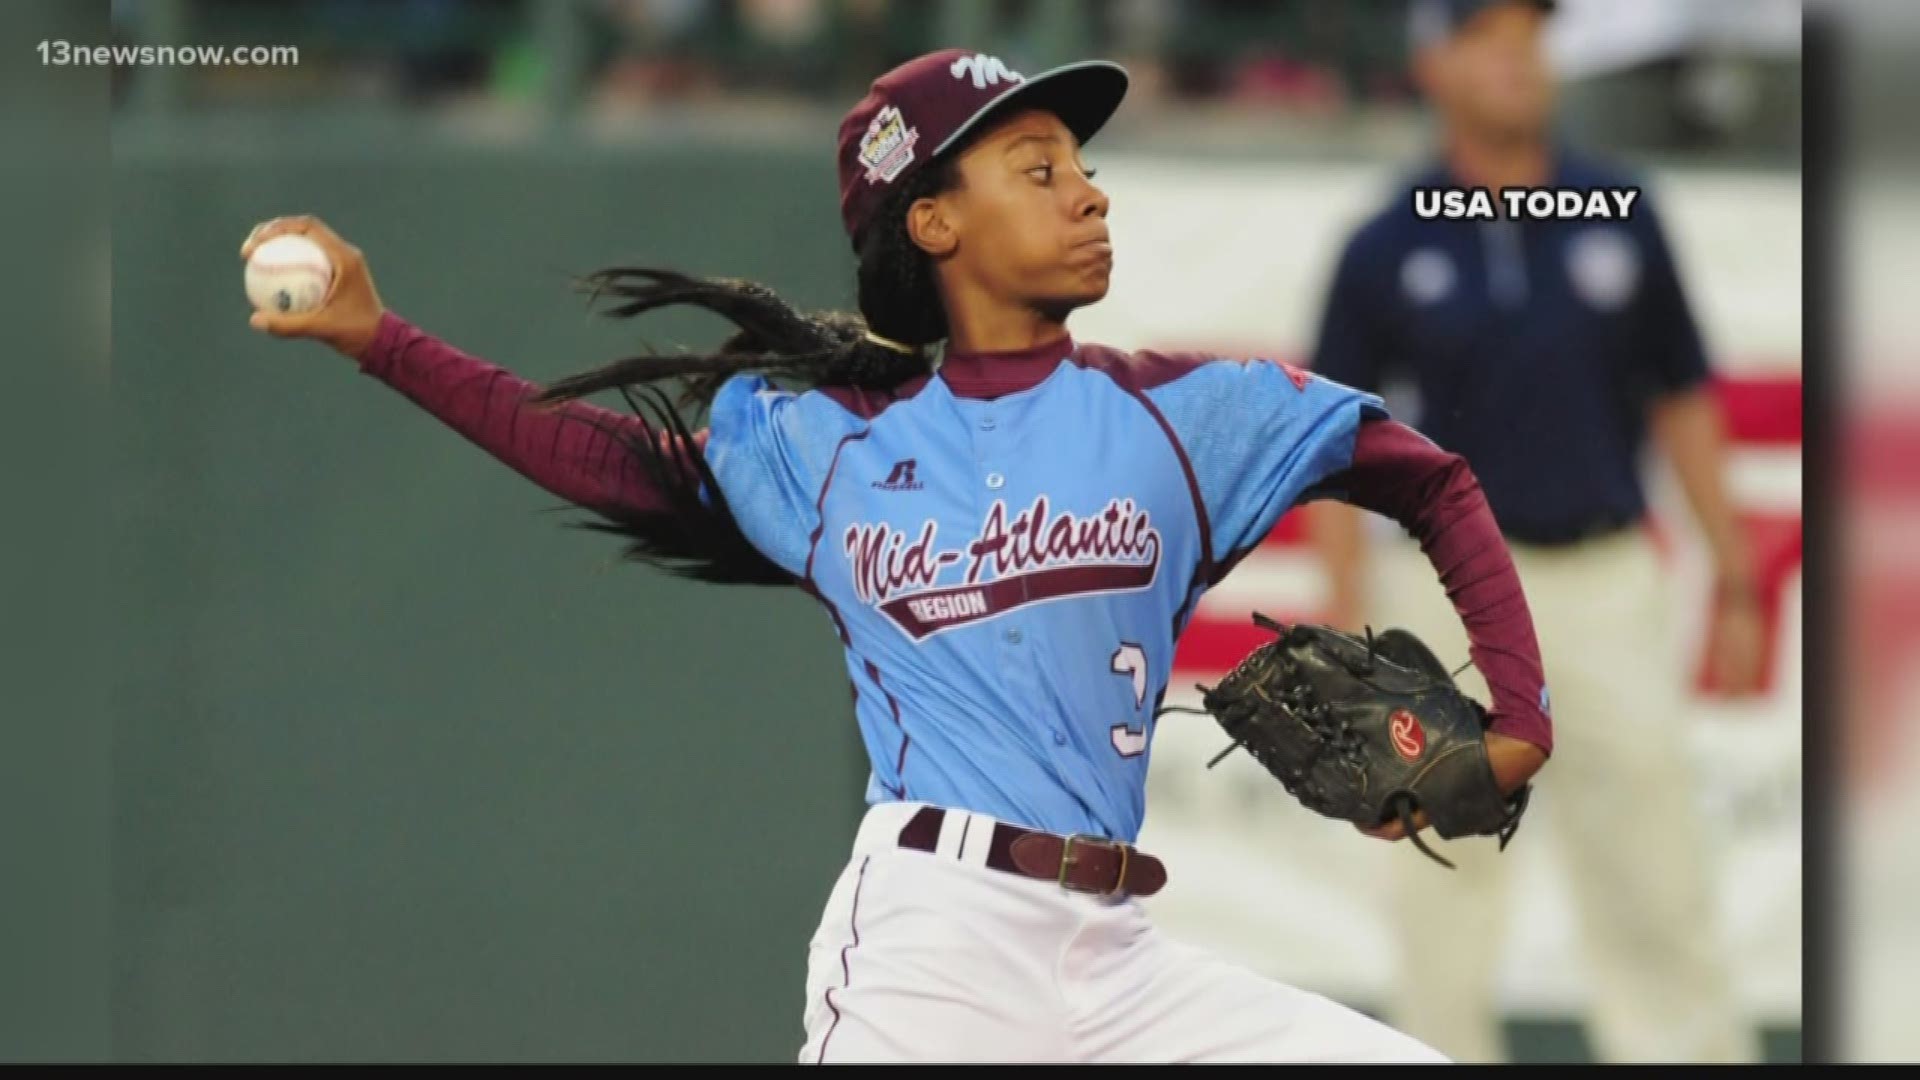 Mo'ne Davis, former Little League World Series star, makes her